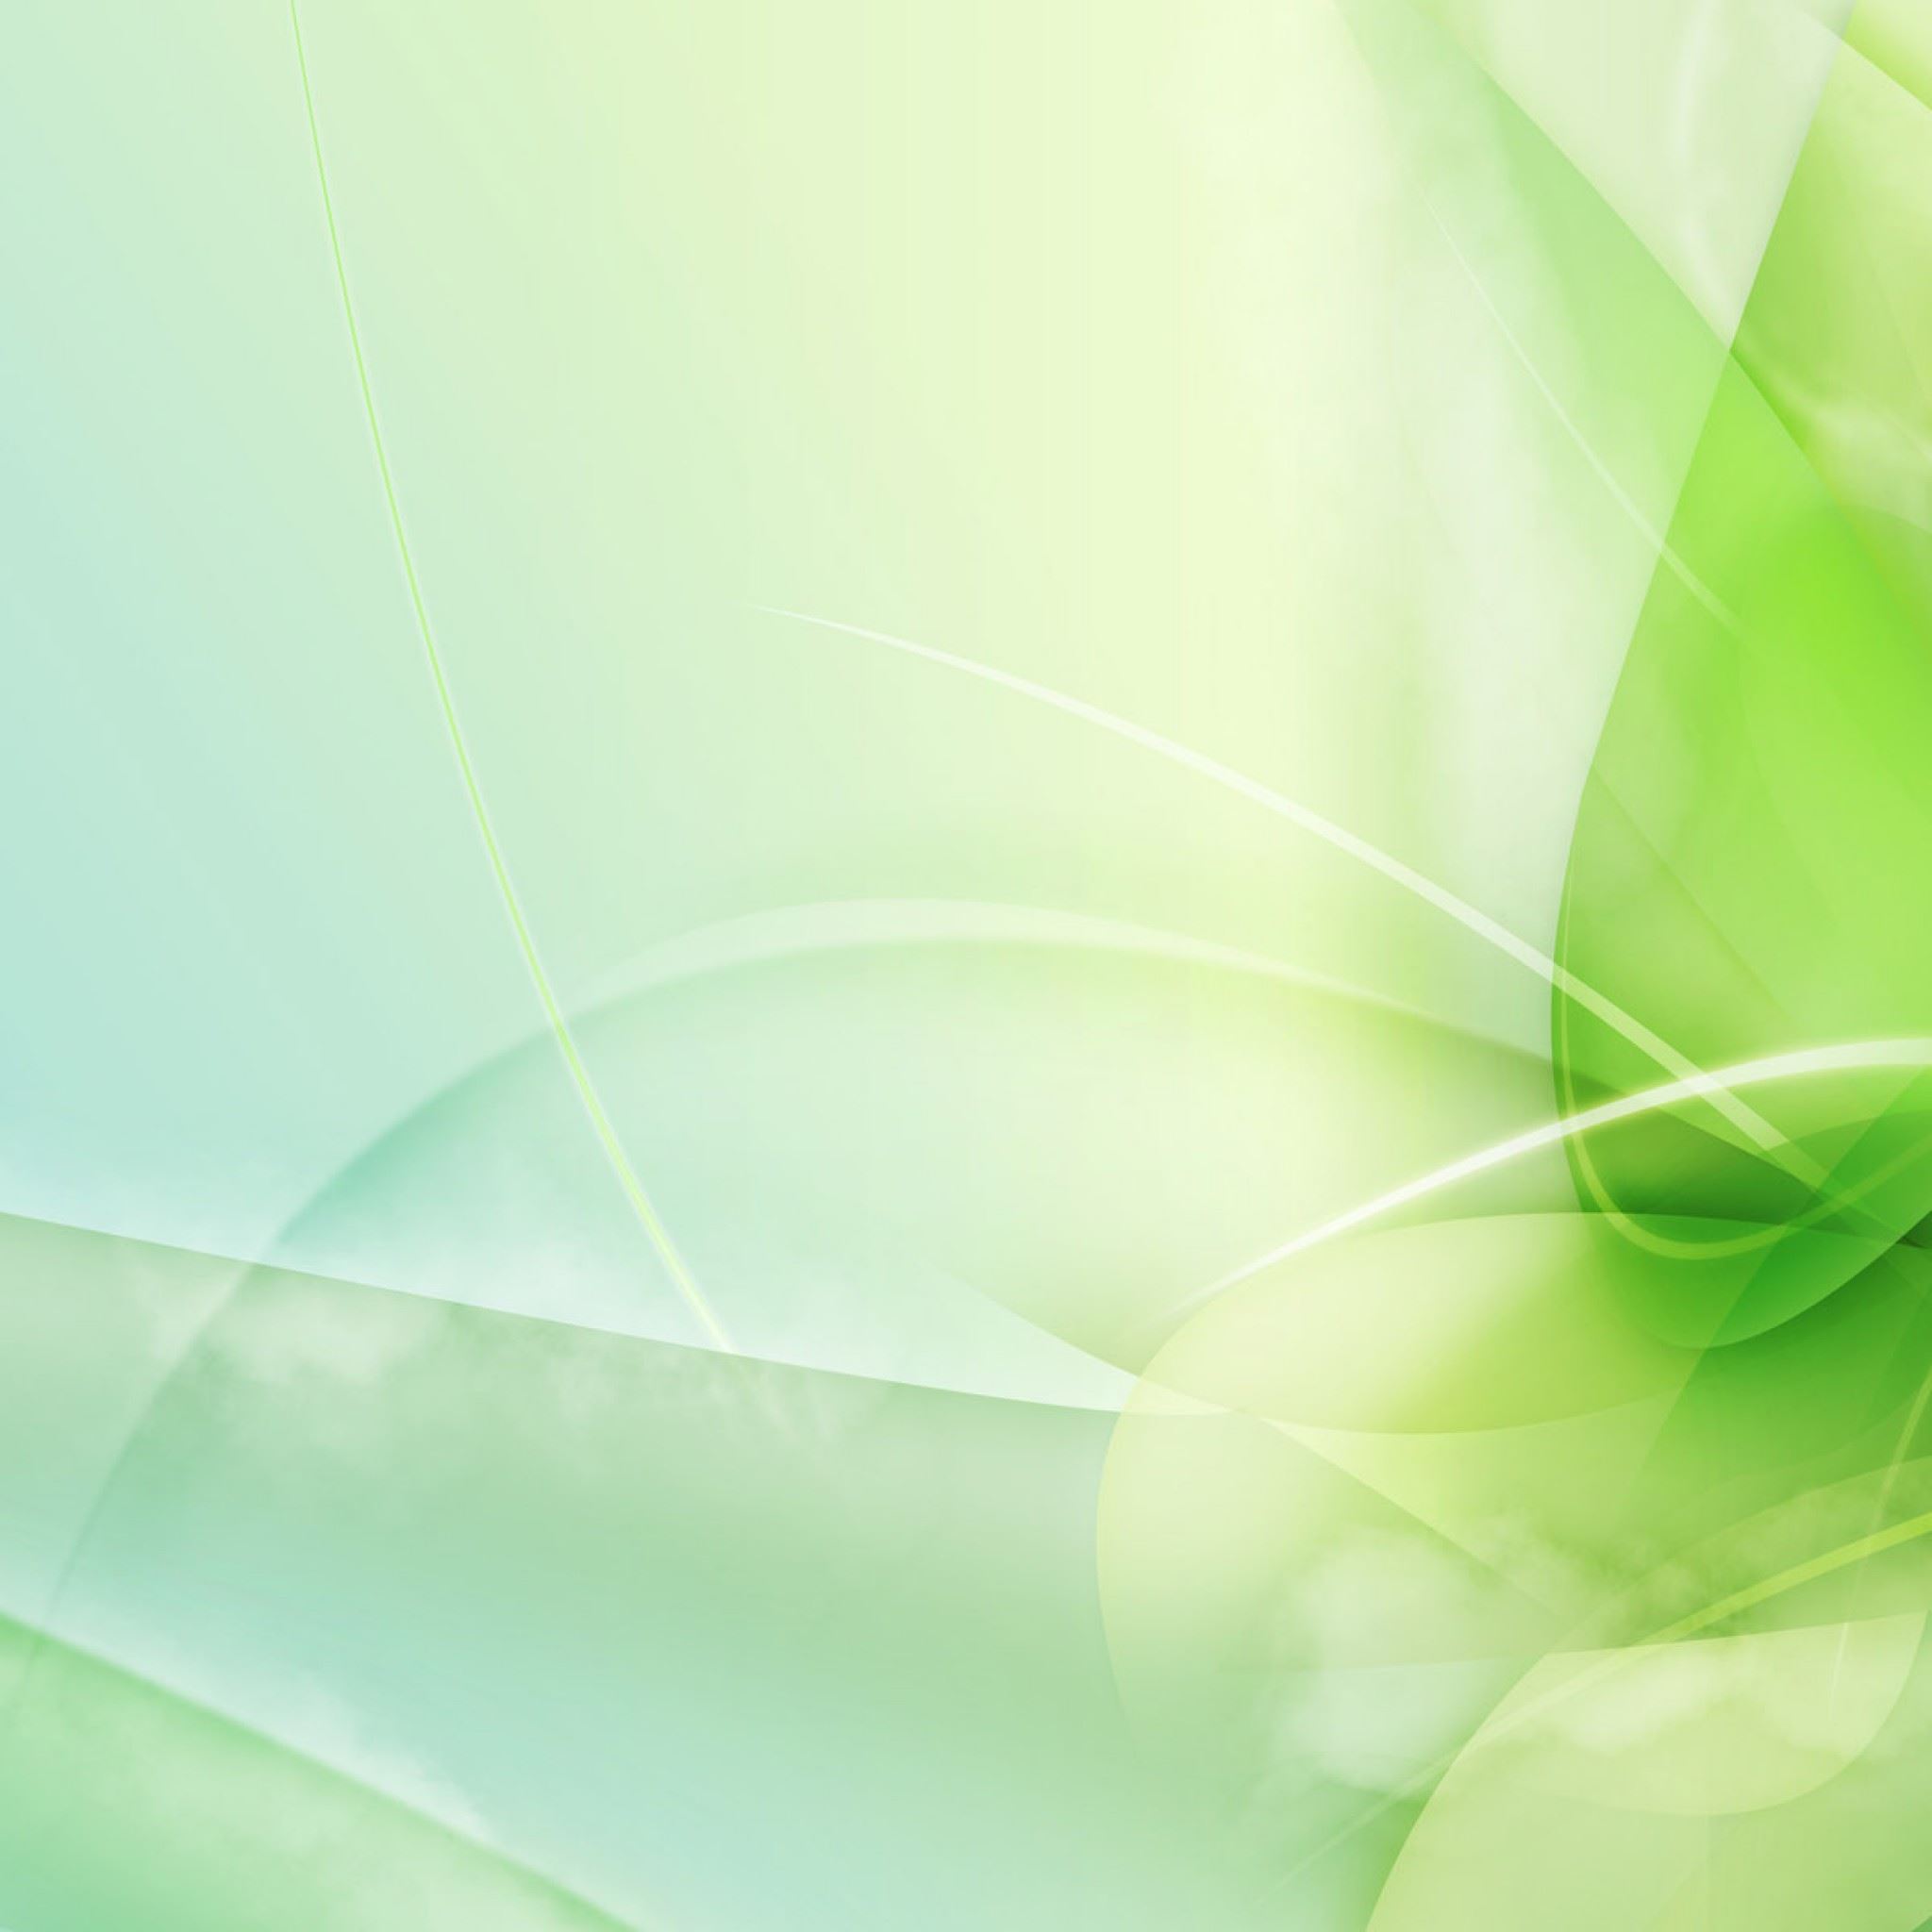 Abstract Green Wave iPad Air Wallpaper Free Download